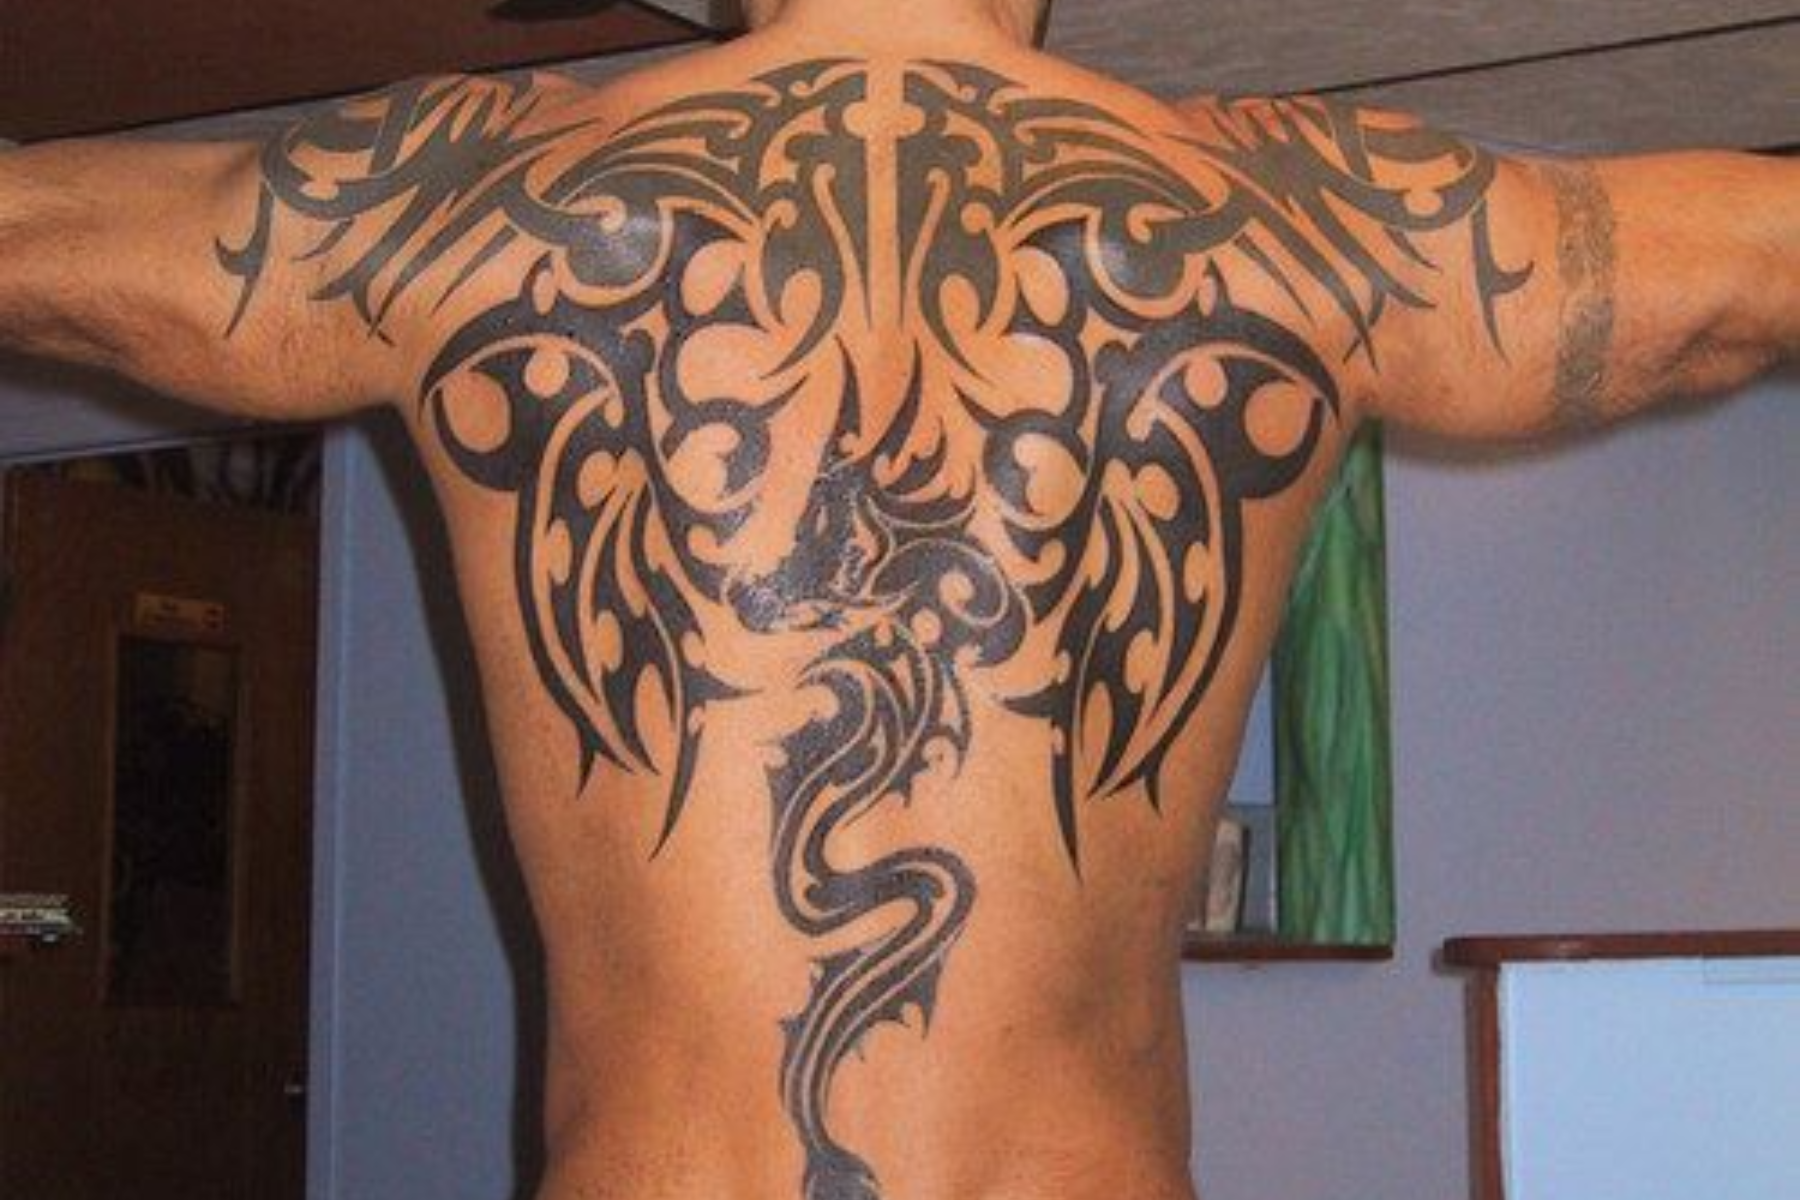 A man has an intricate black back tattoo